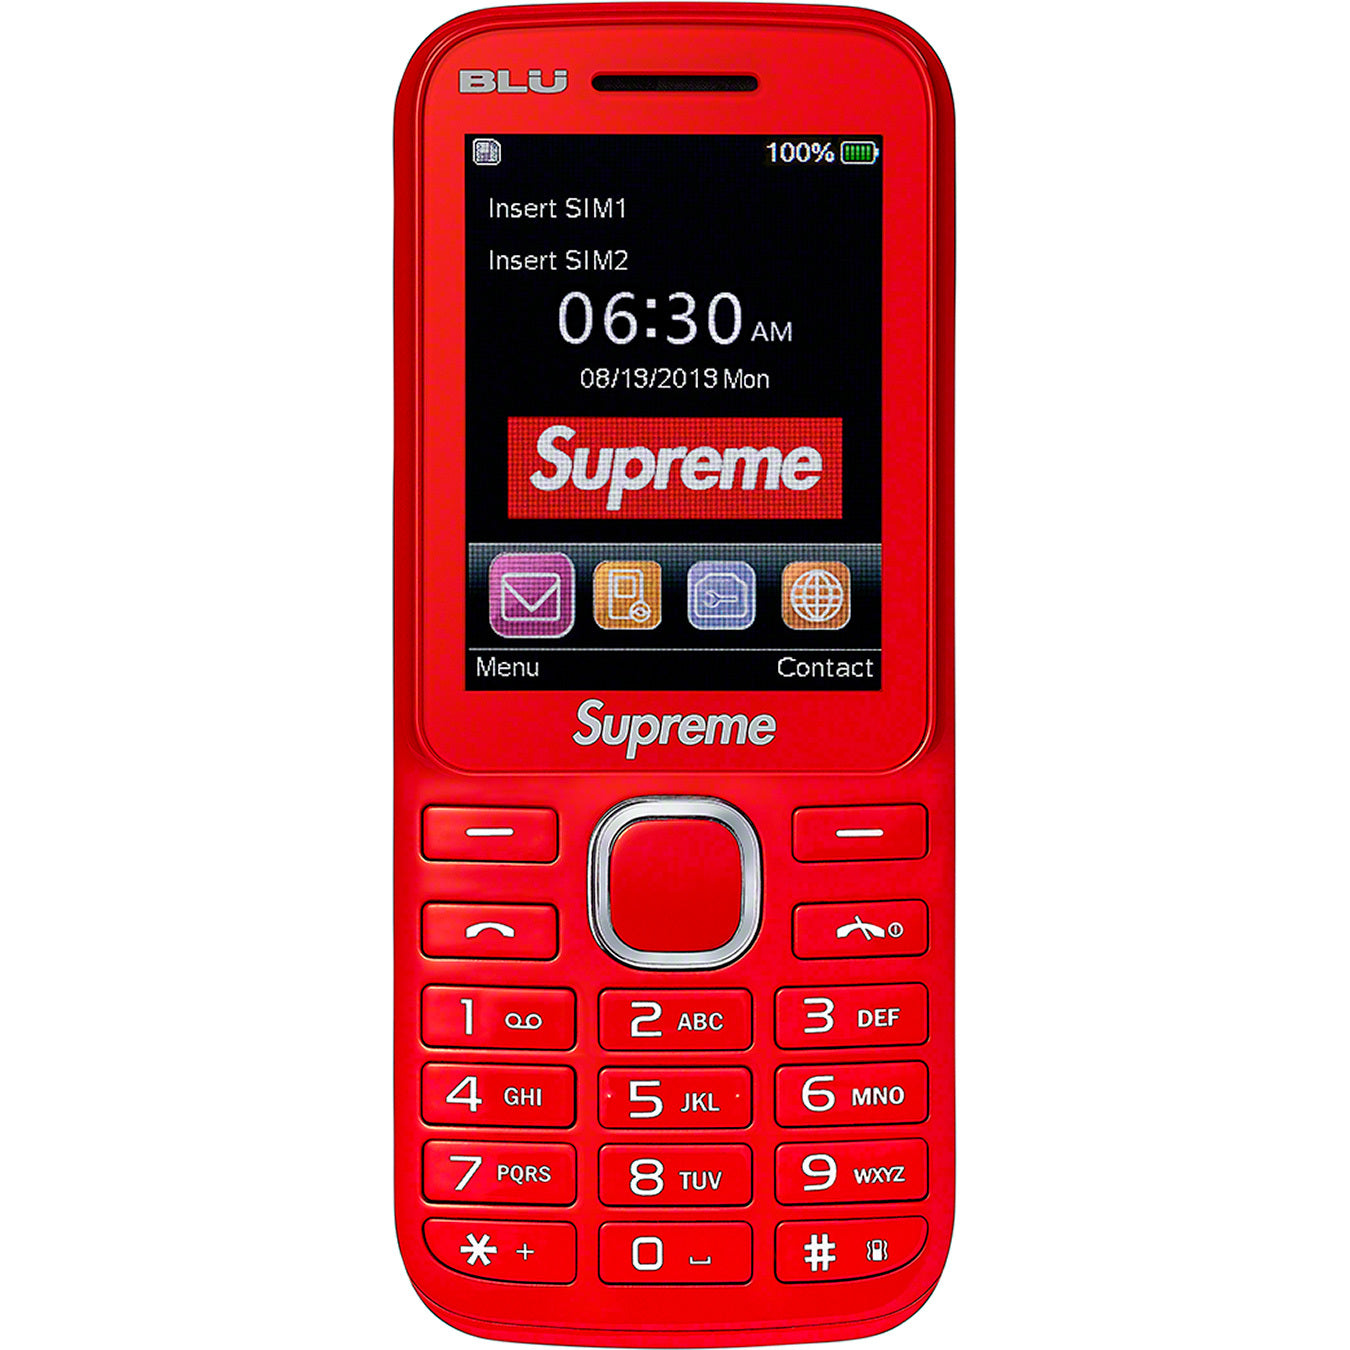 Supreme Blu Burner Phone - Red from Supreme